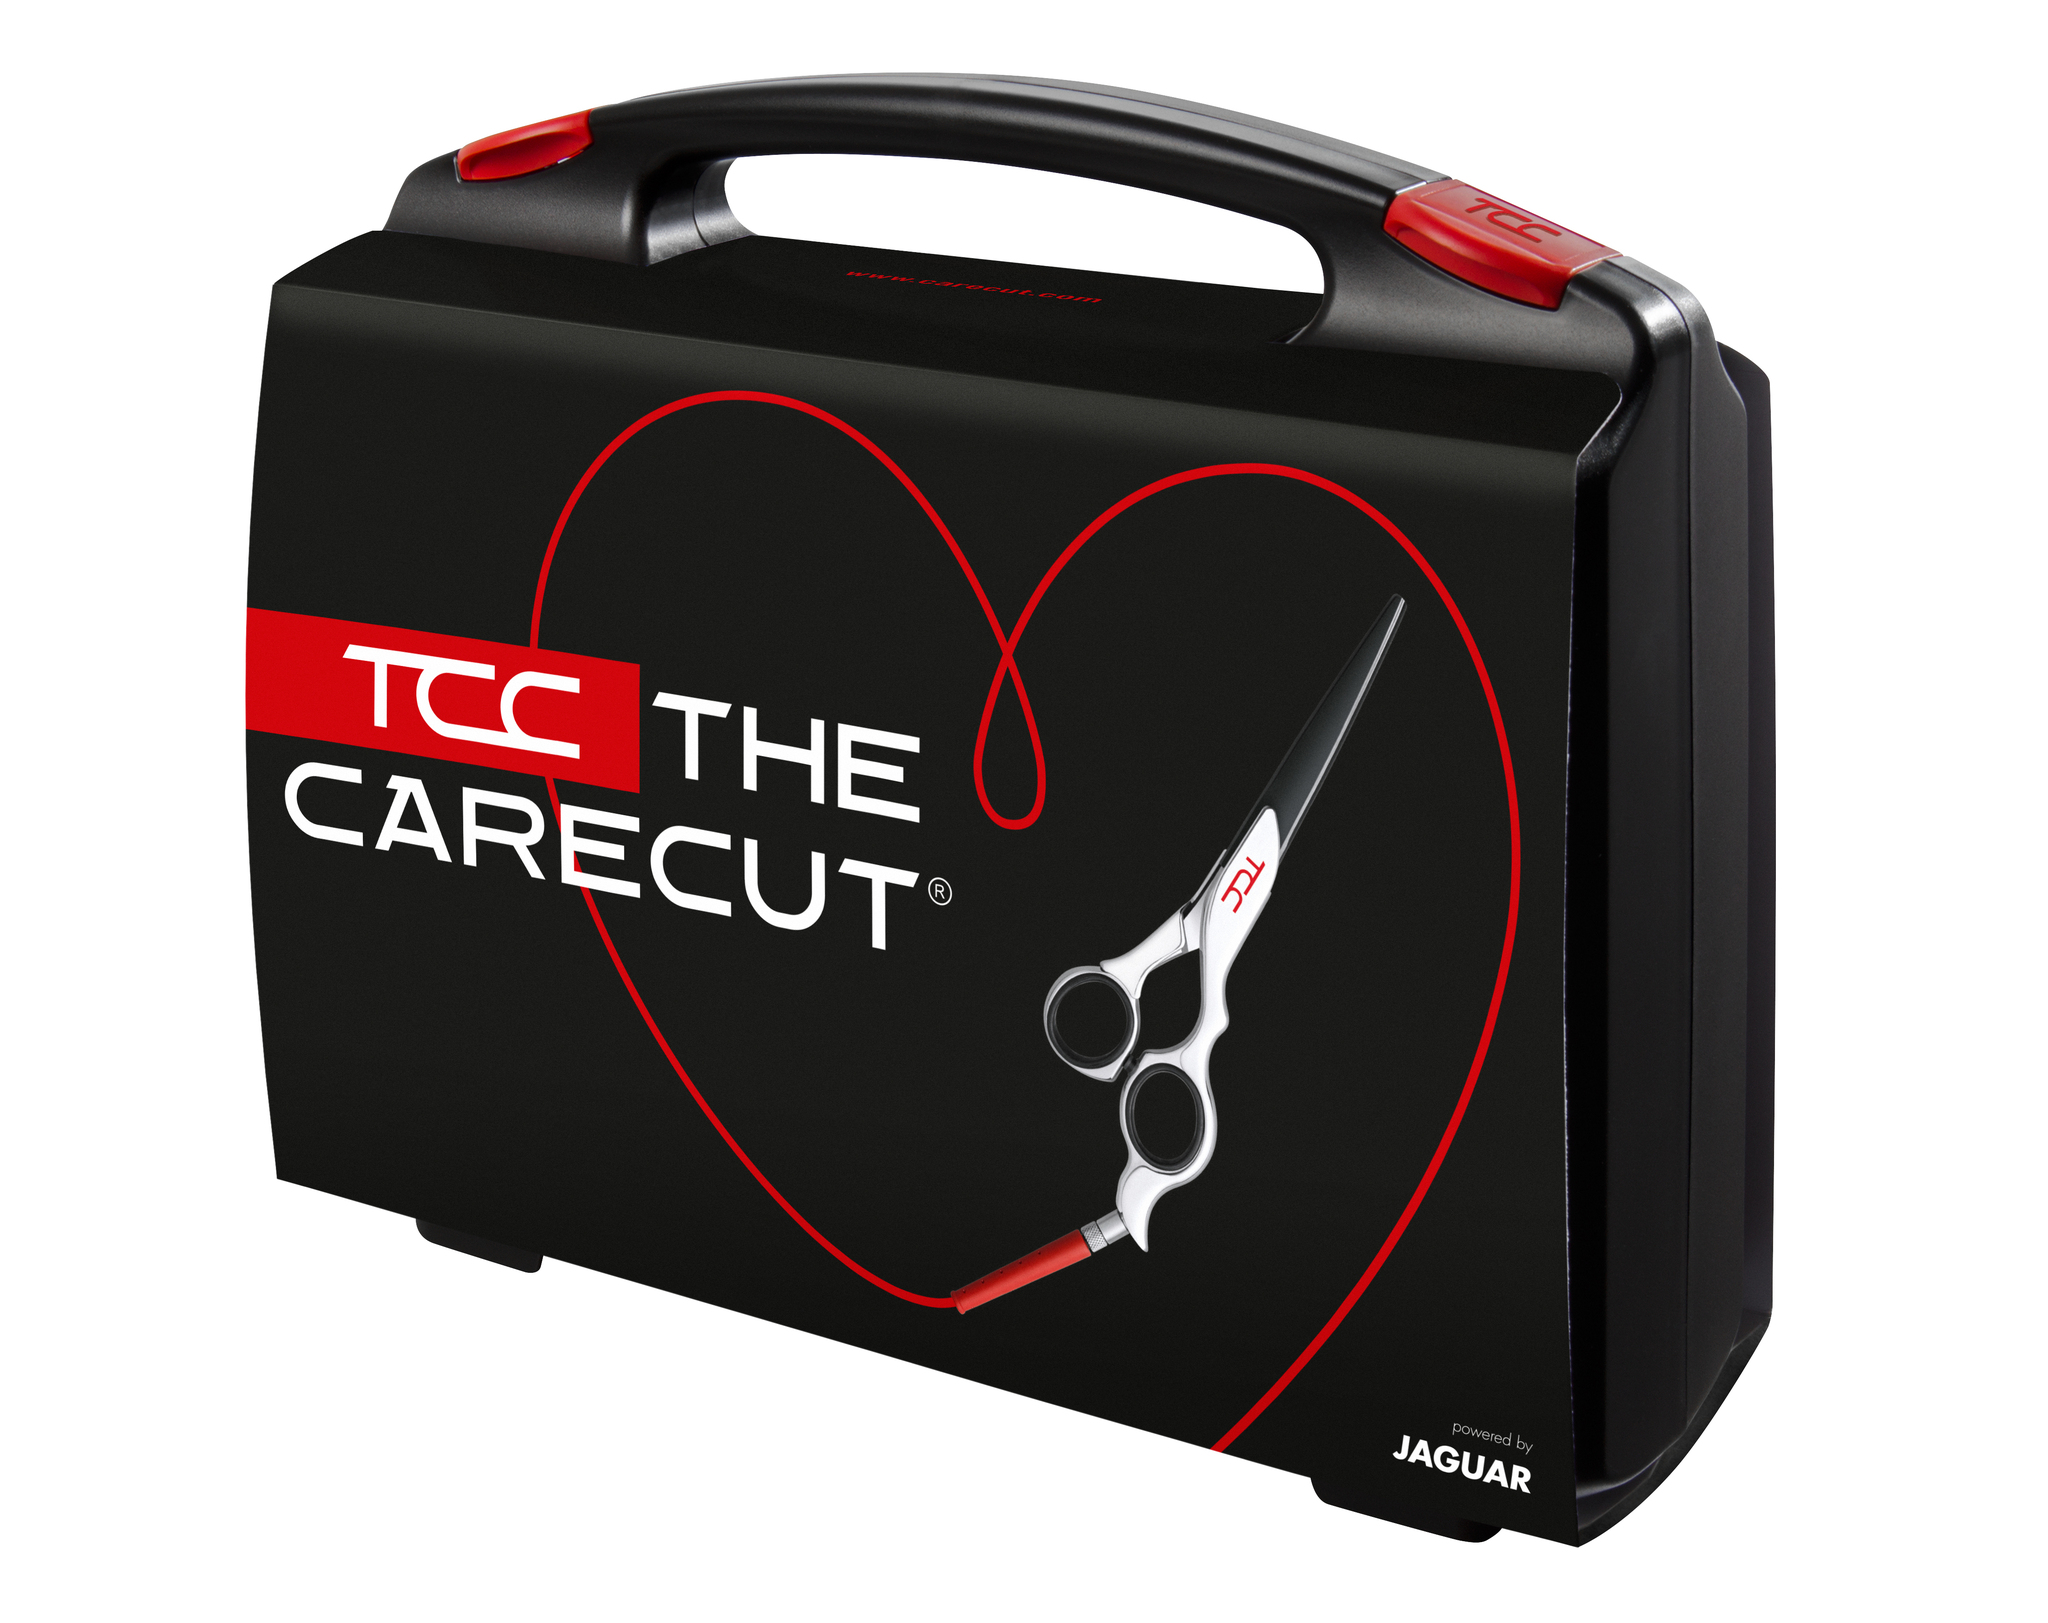 TCC The Carecut